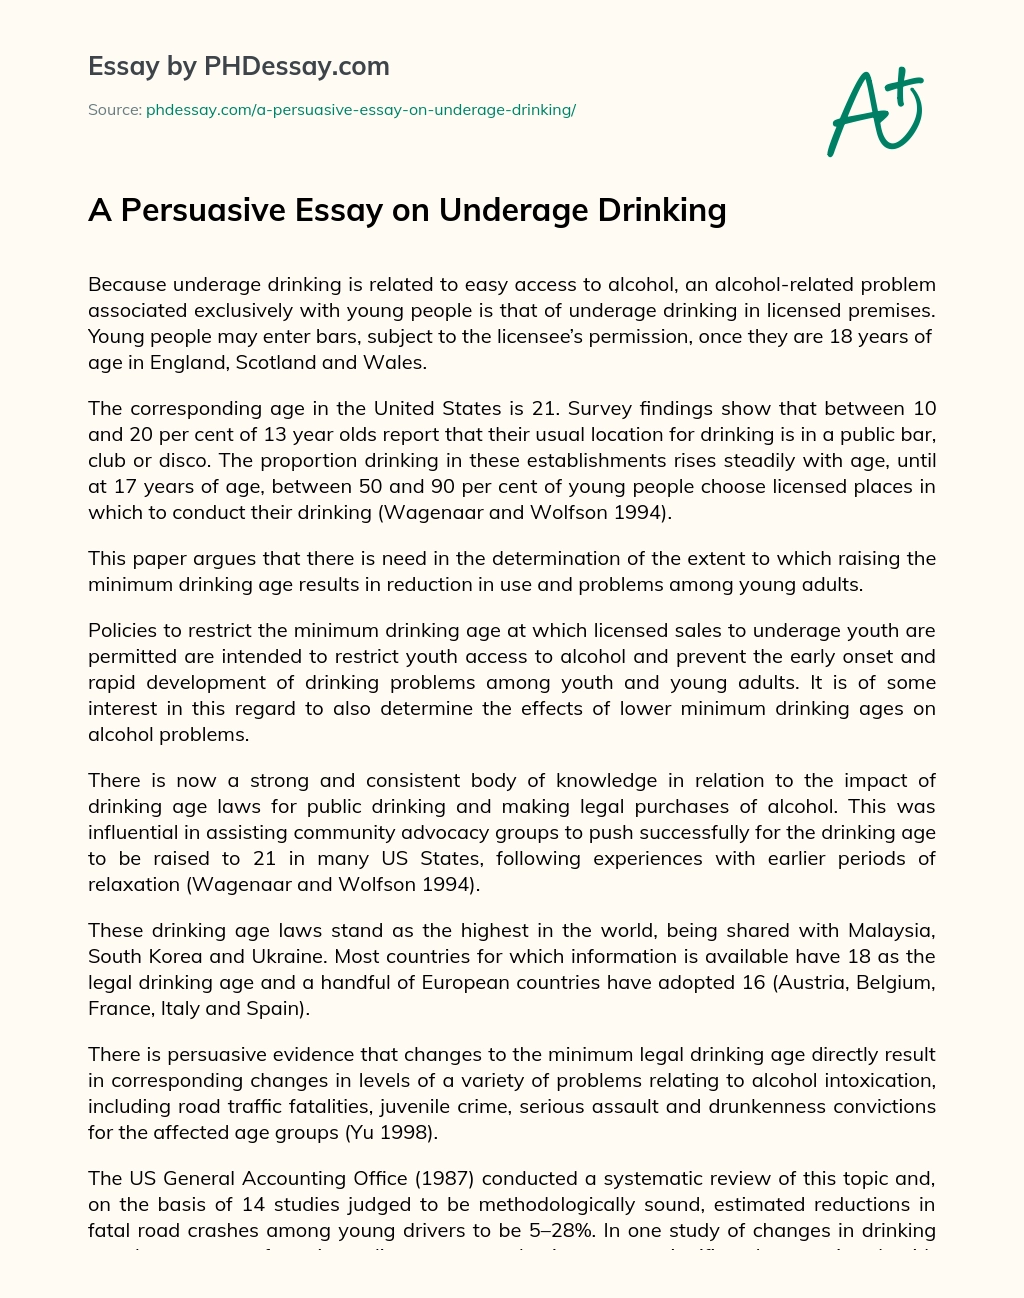 A Persuasive Essay on Underage Drinking essay